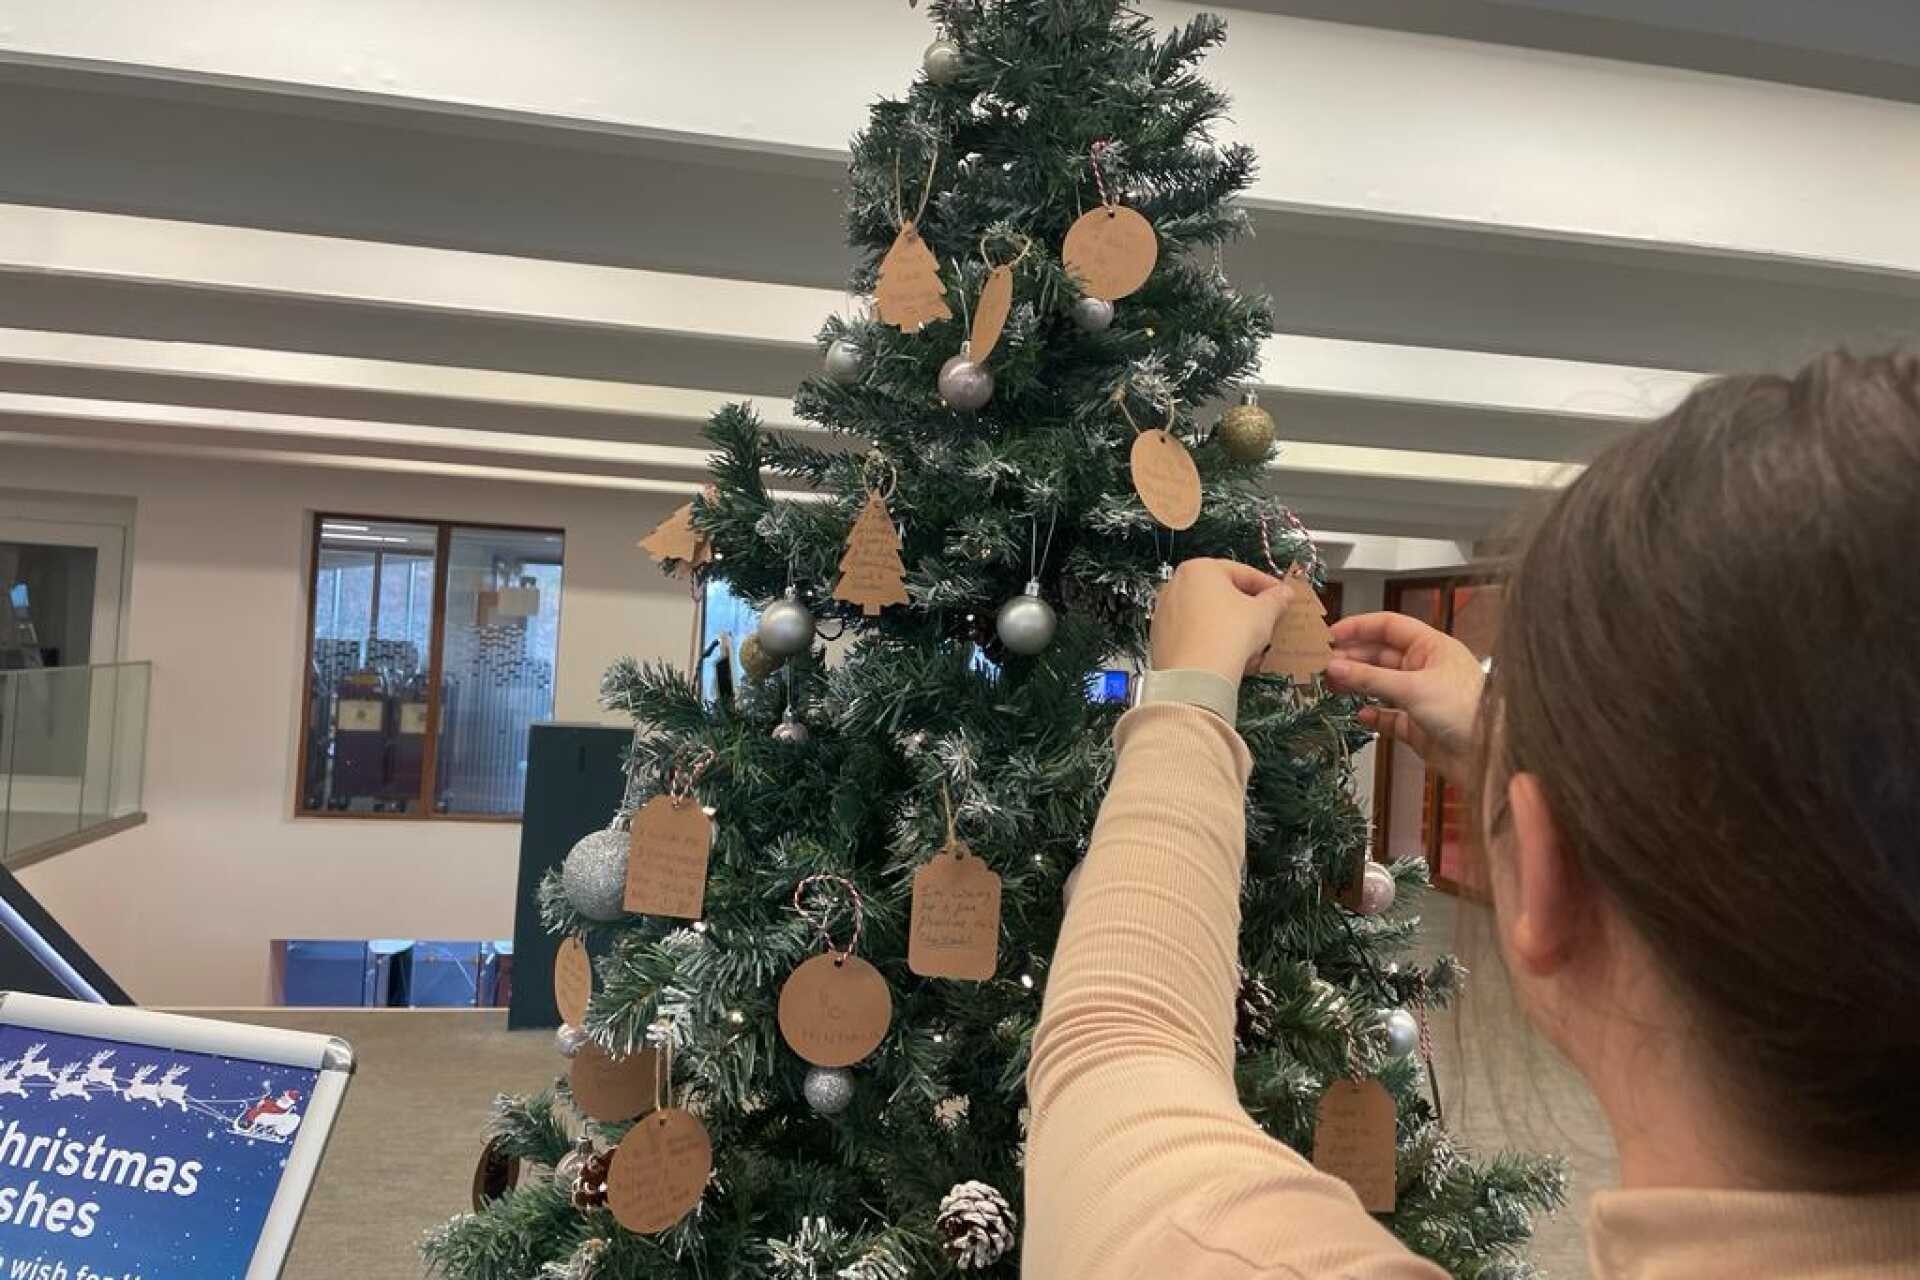 Student decorating Christmas tree